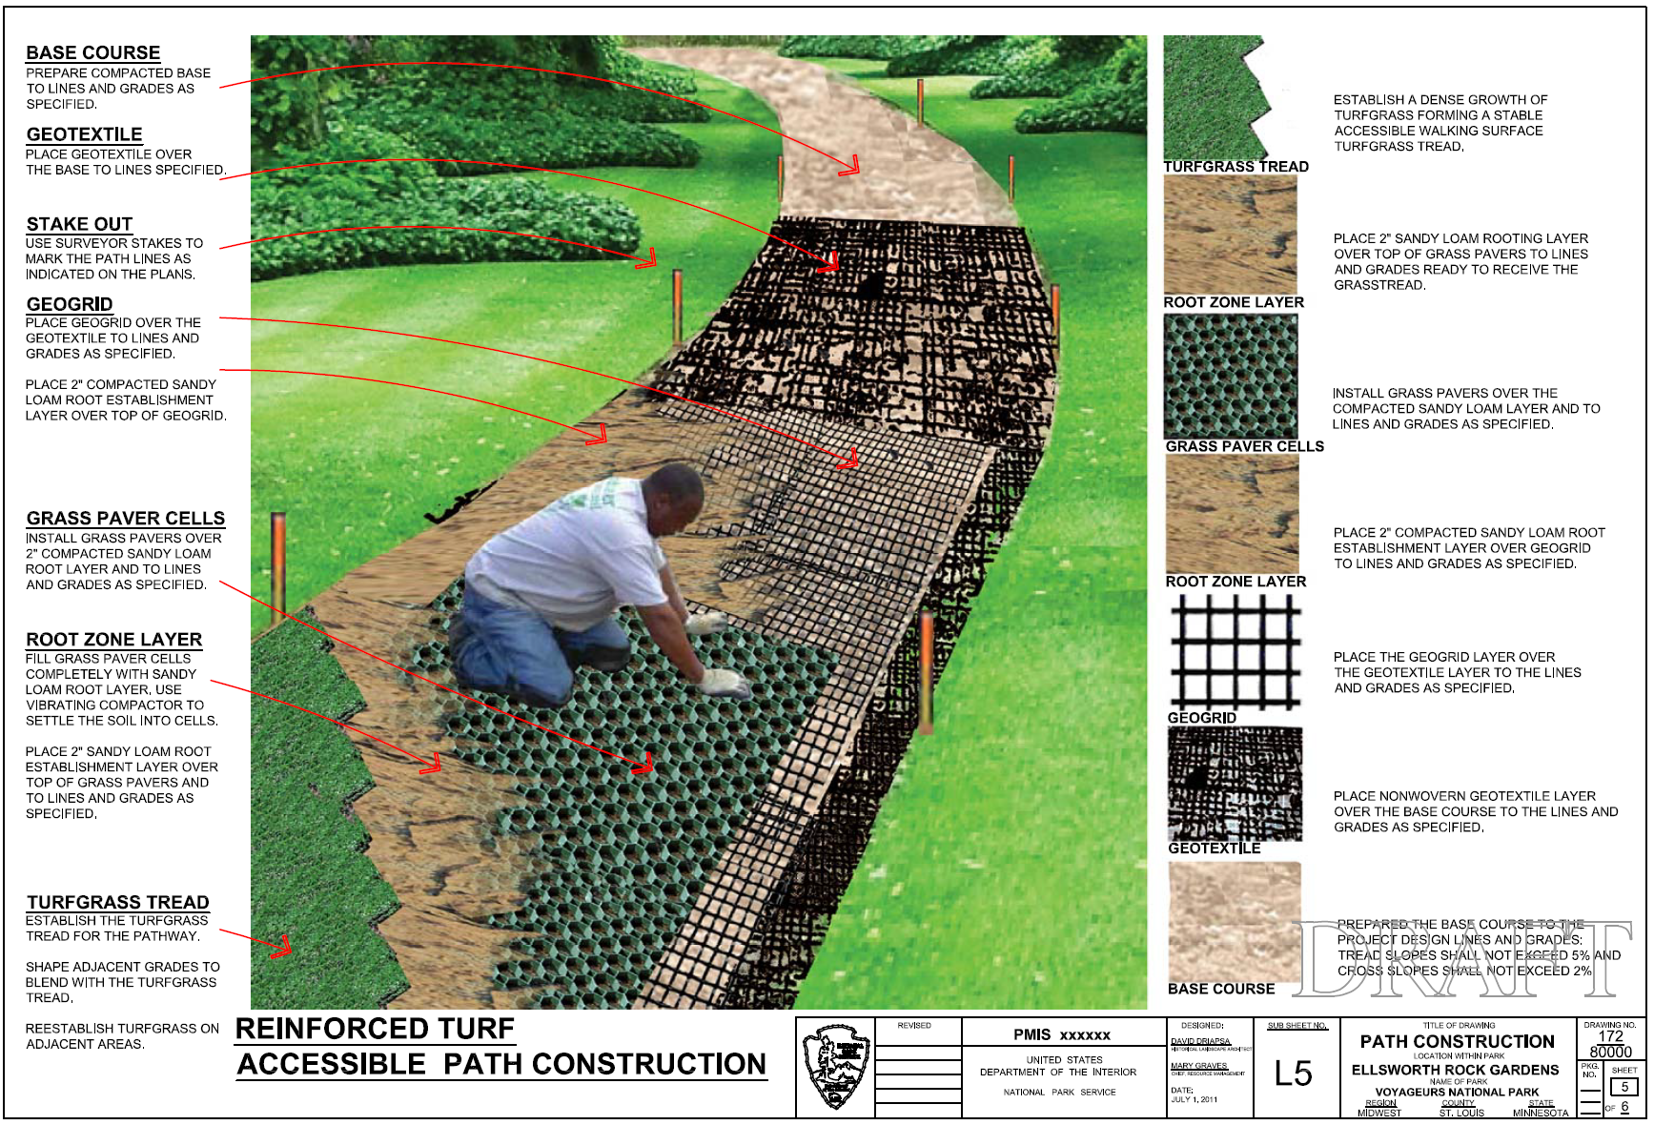 Reinforced Turf Accessible Path Construction Illustration, Ellsworth Rock Gardens